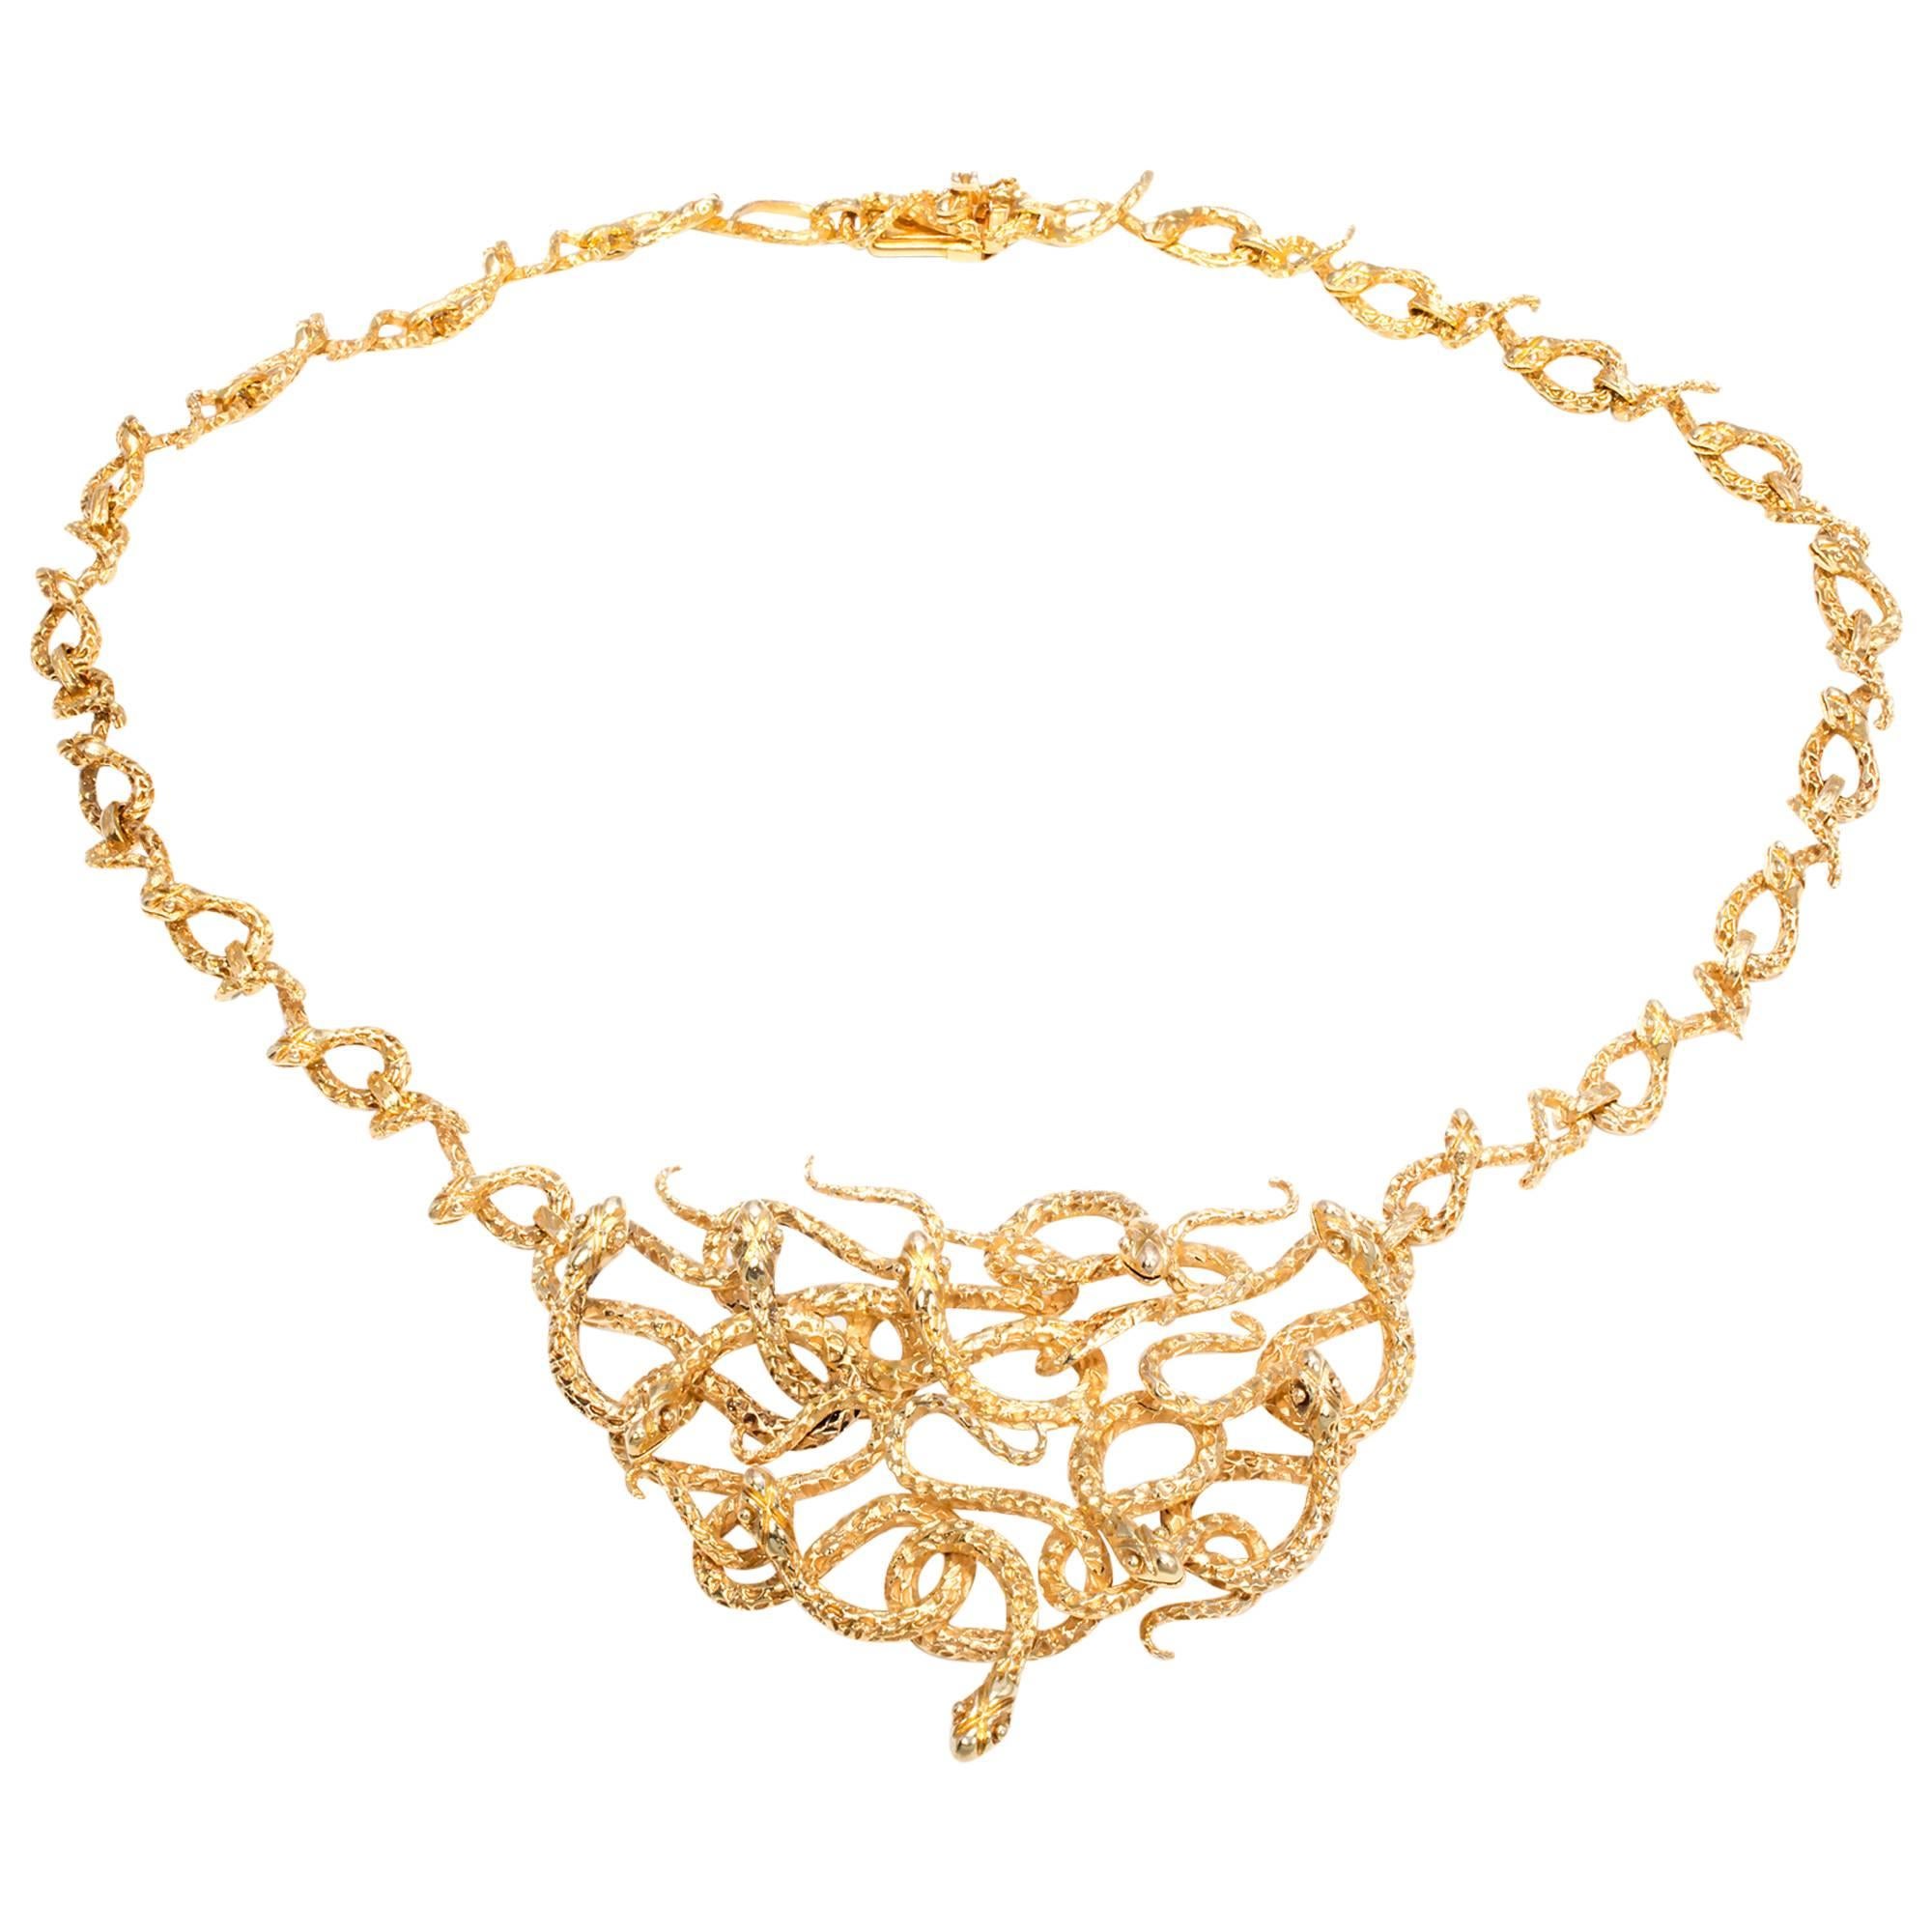 Gold Medusa Snake Necklace Pendant 